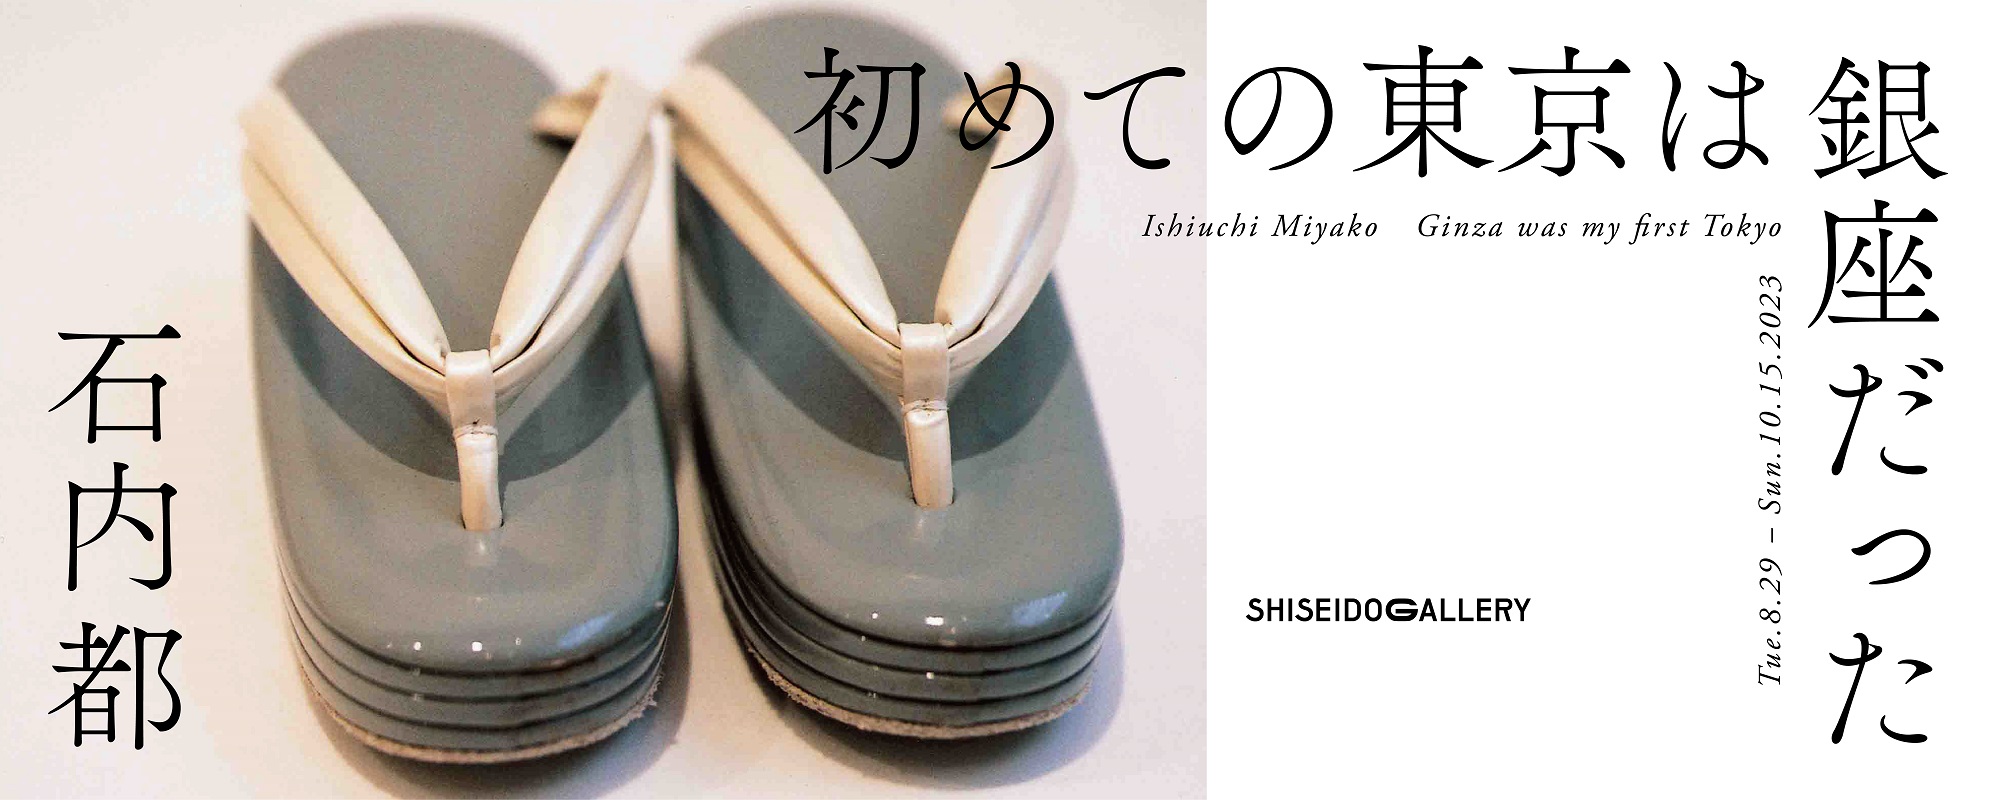 Ishiuchi Miyako  “Ginza was my first Tokyo”